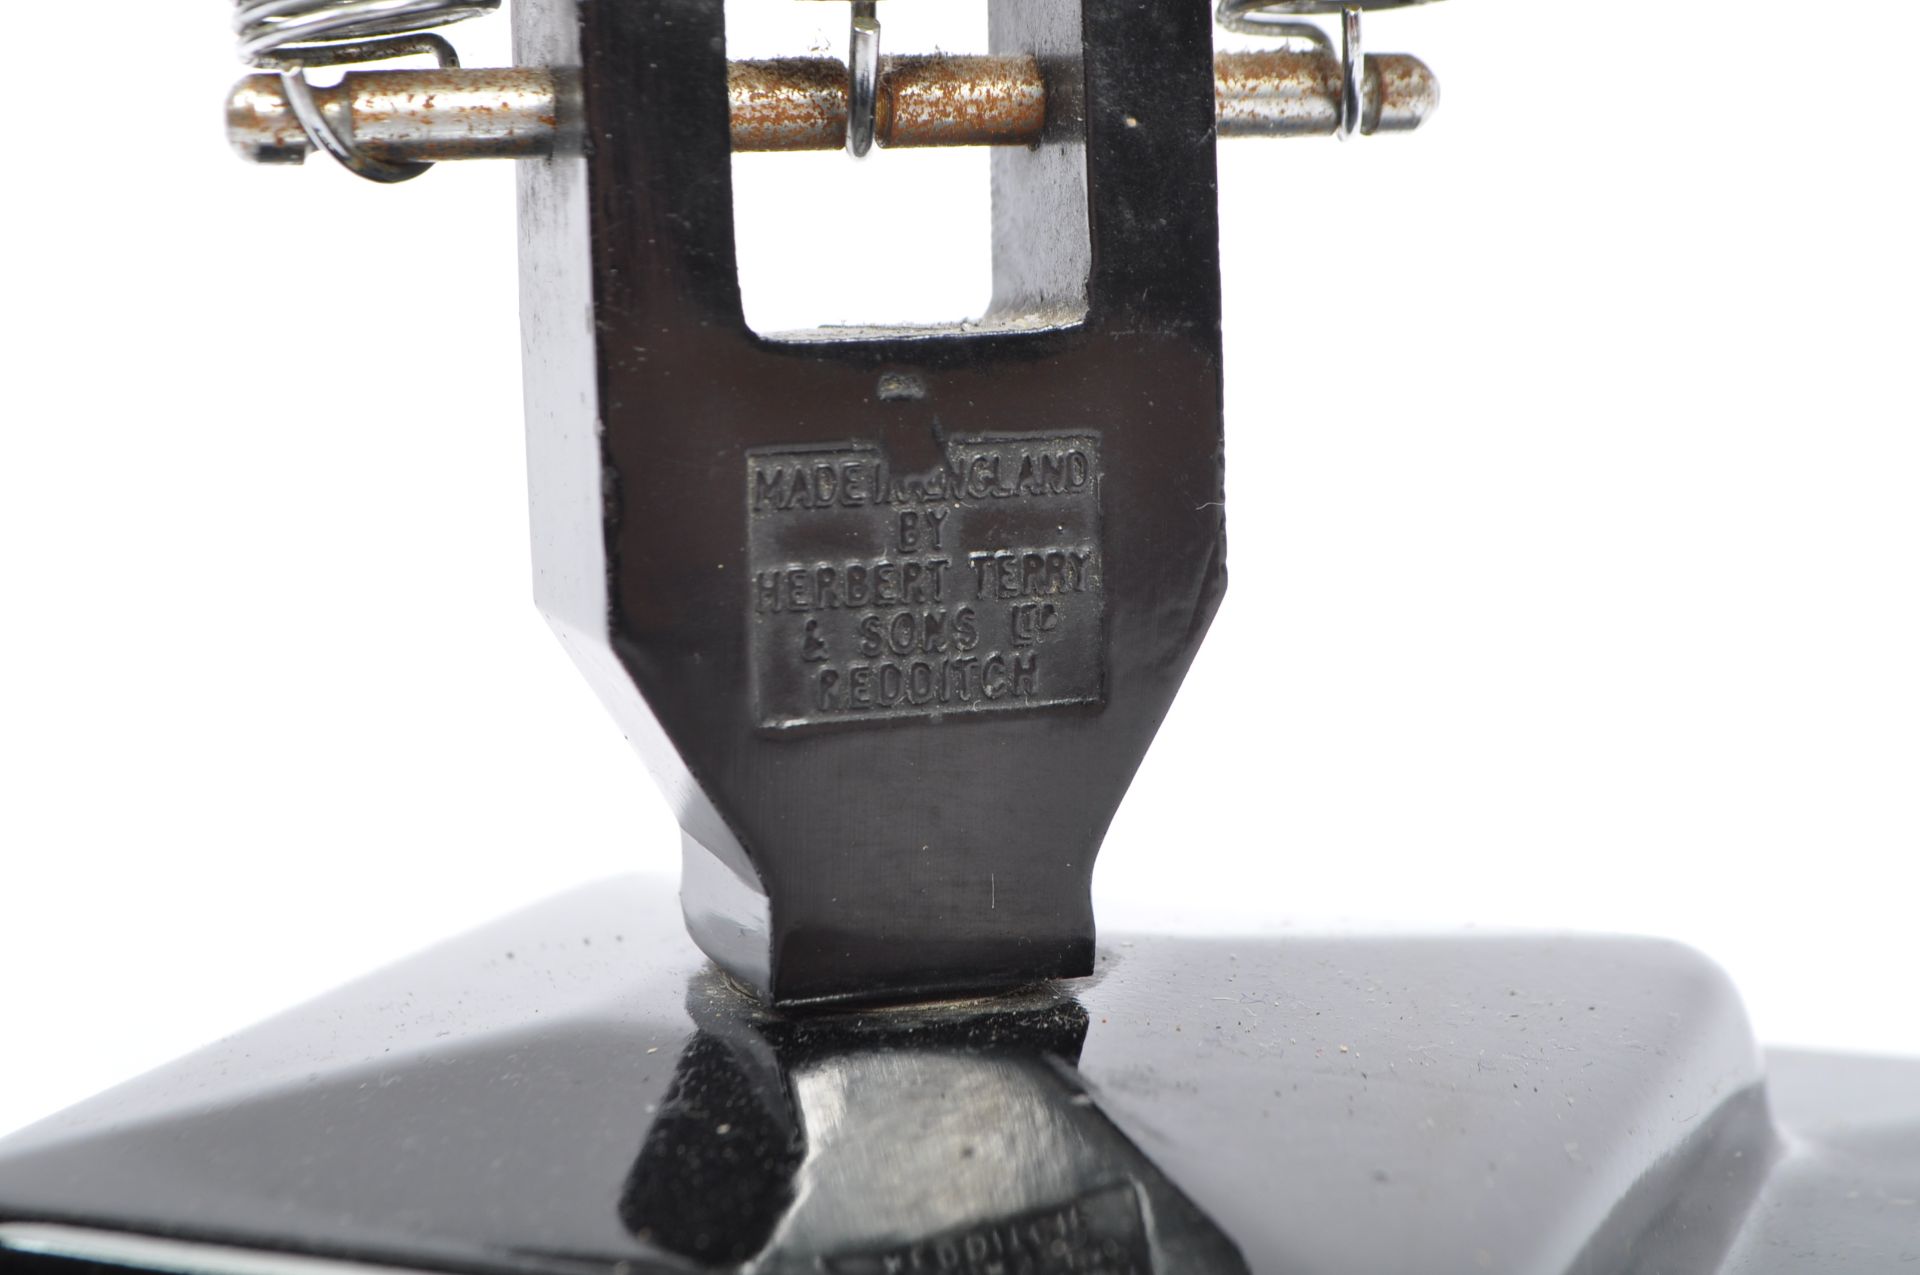 HERBERT TERRY MODEL 1227 VINTAGE ANGLEPOISE DESK LAMP - Image 4 of 4